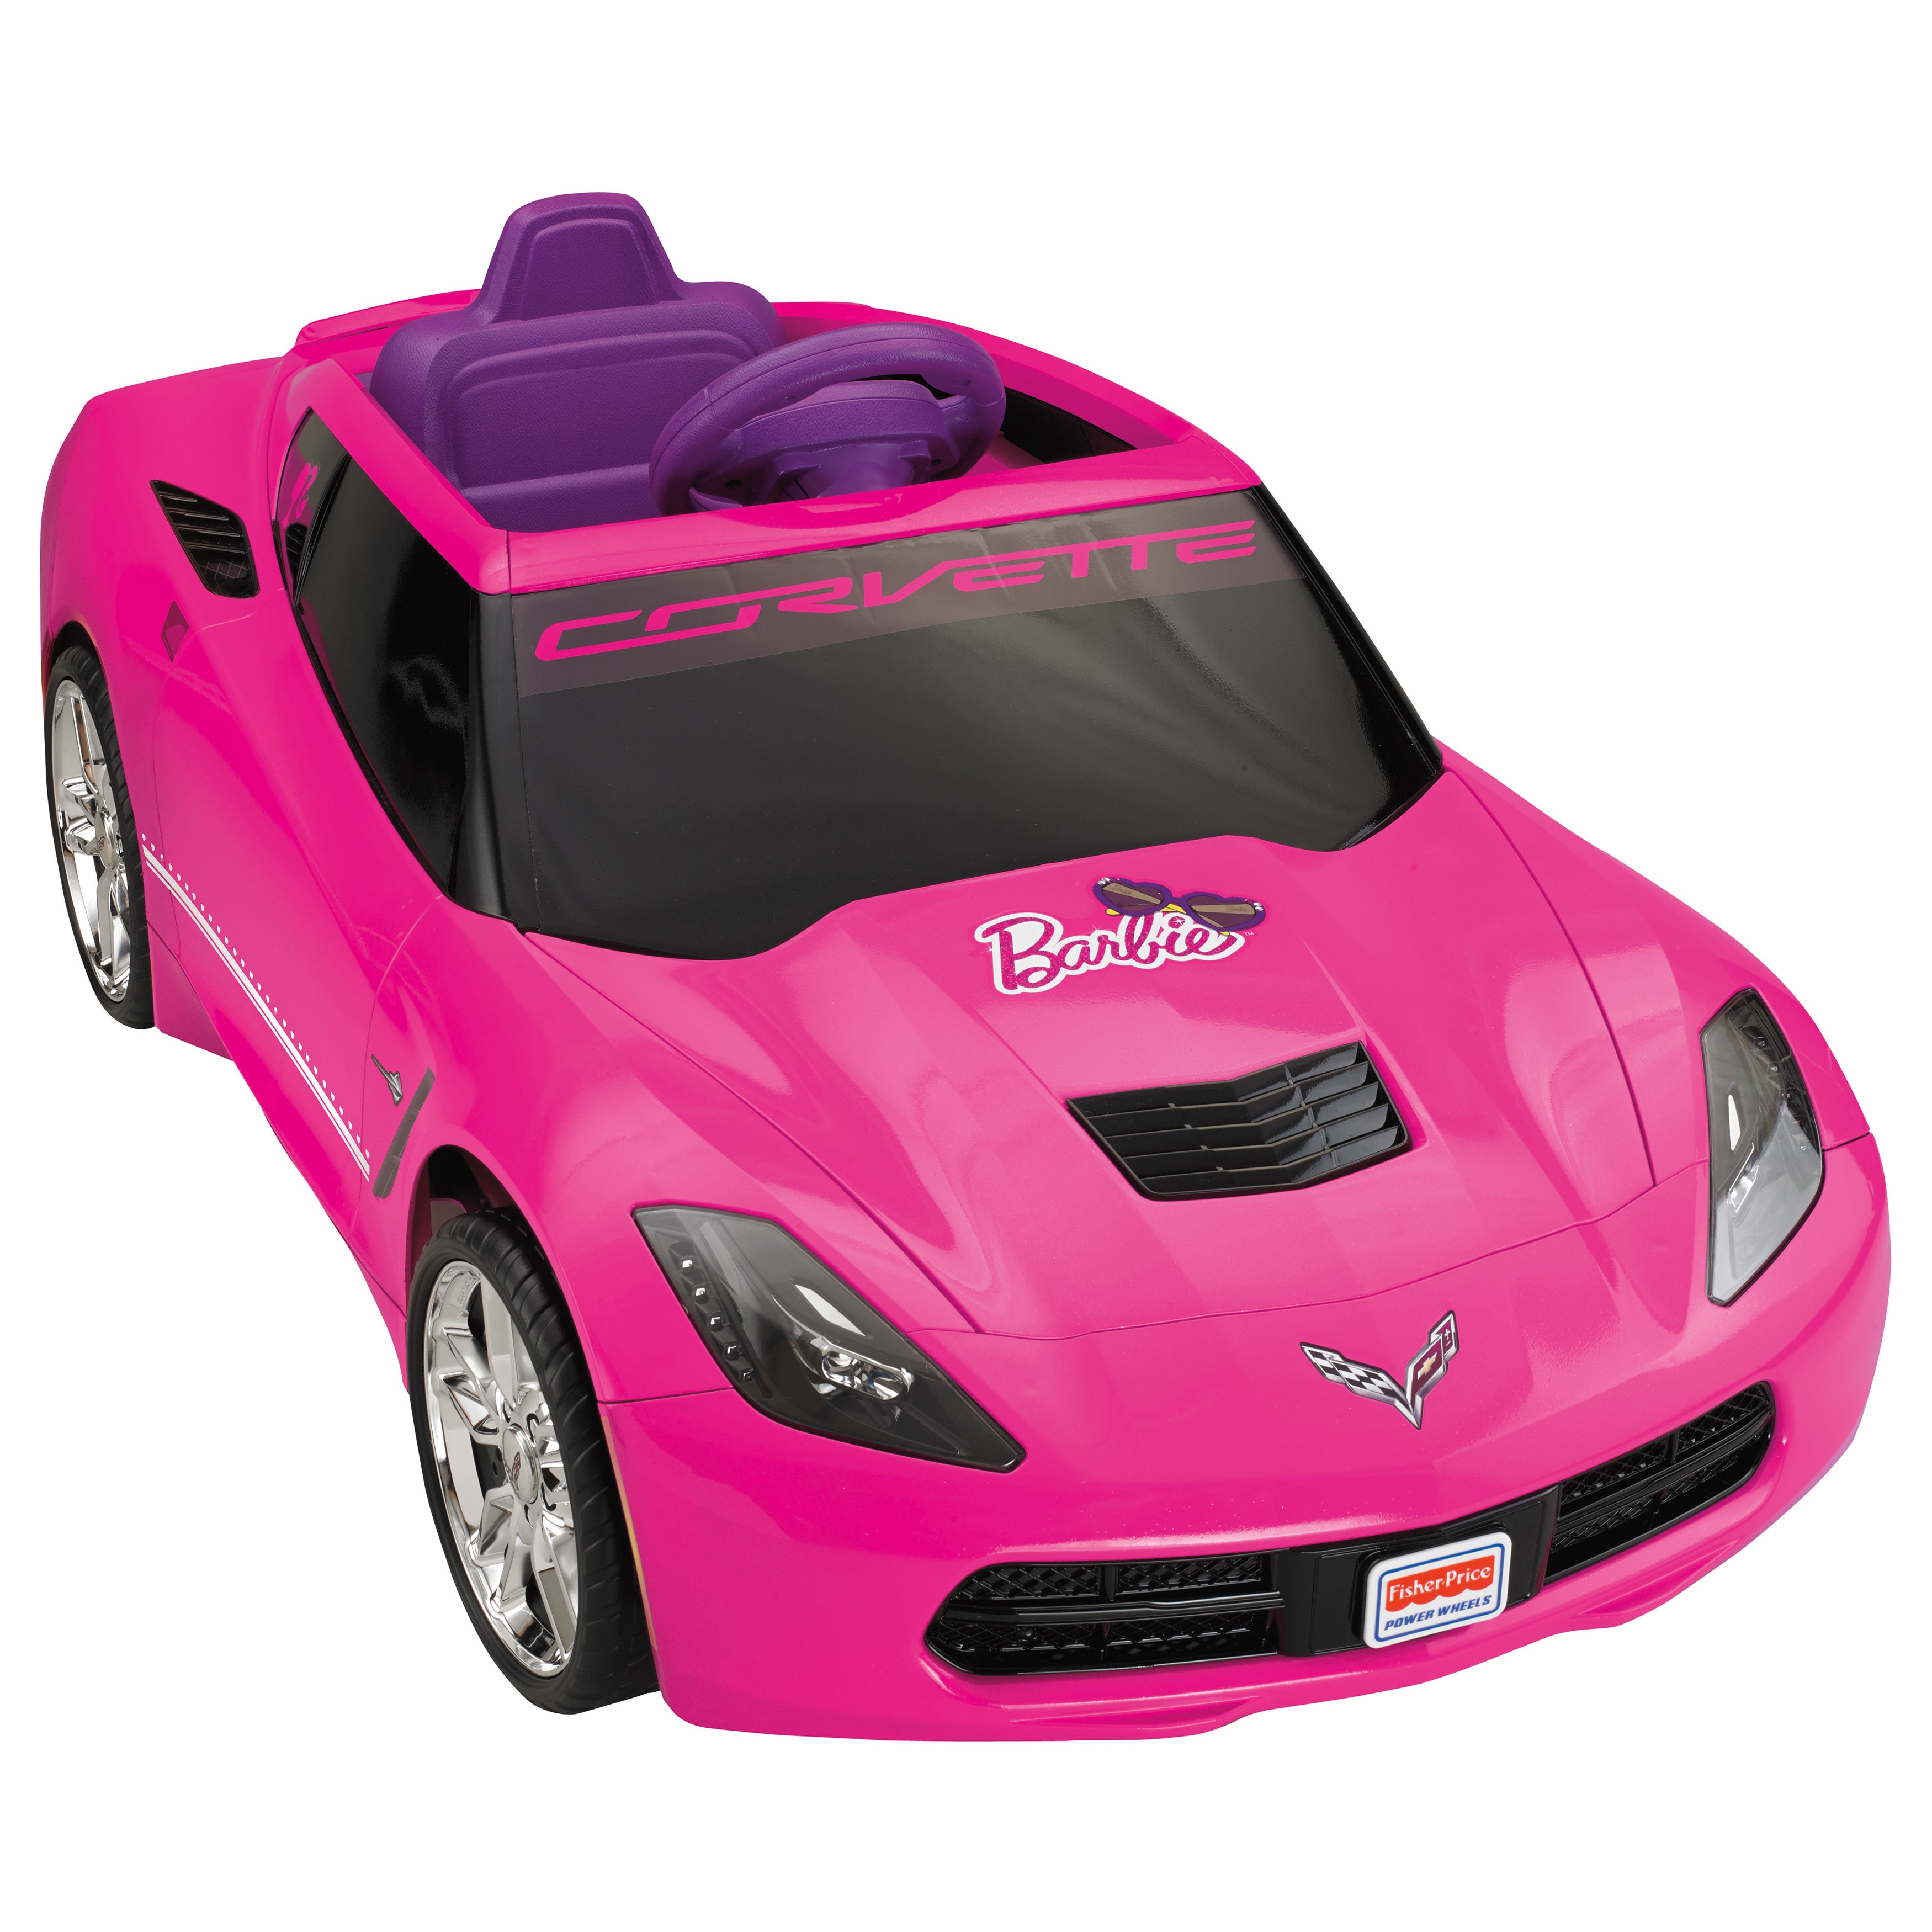 barbie corvette power wheels